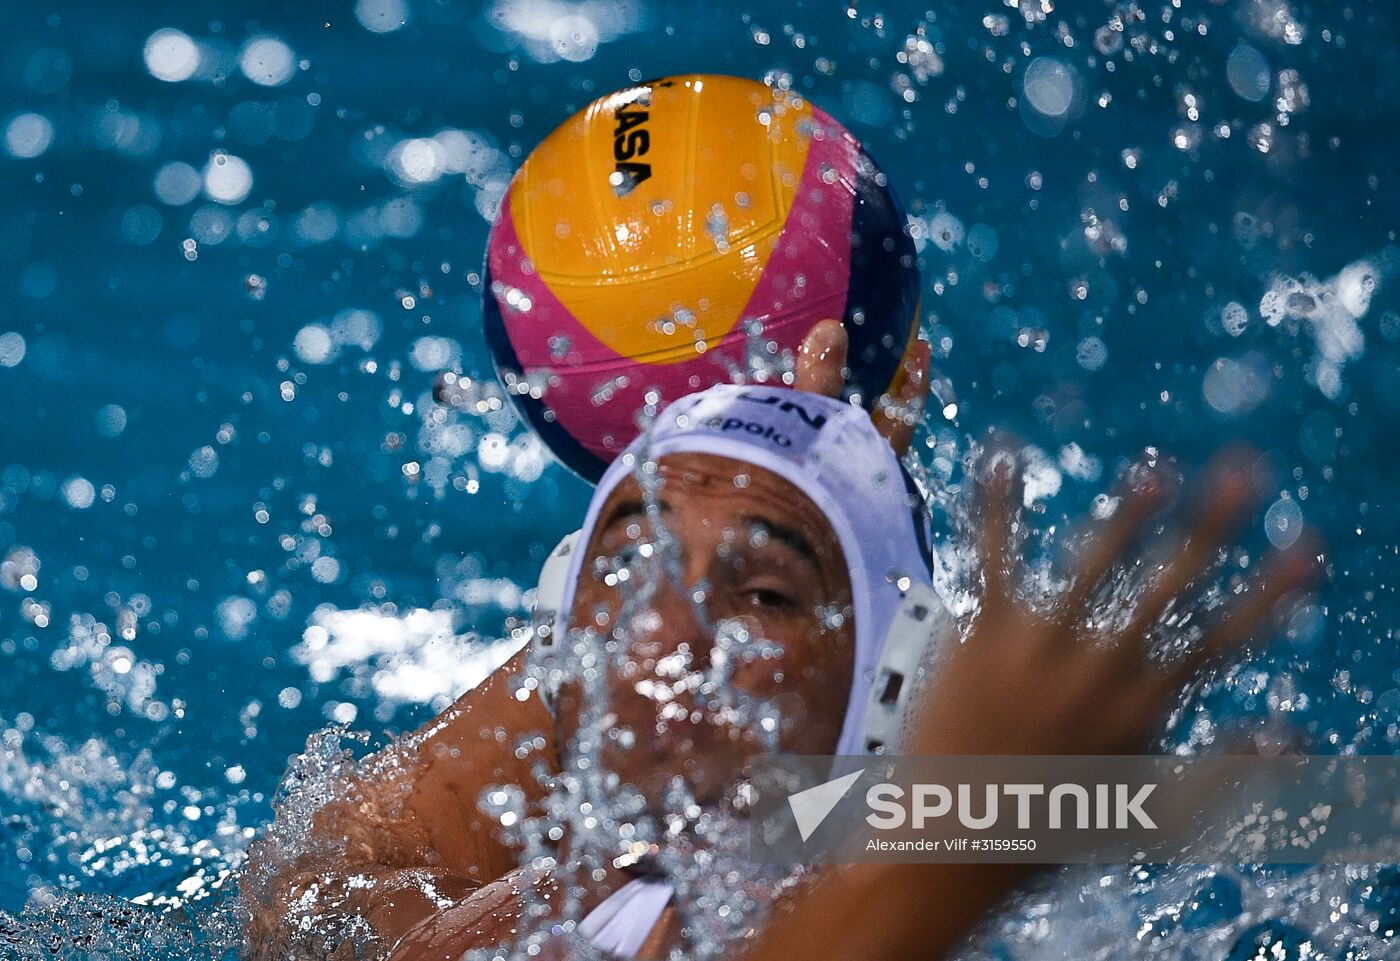 17th FINA World Championships. Men. Water polo. Hungary vs. Russia (quarterfinal)